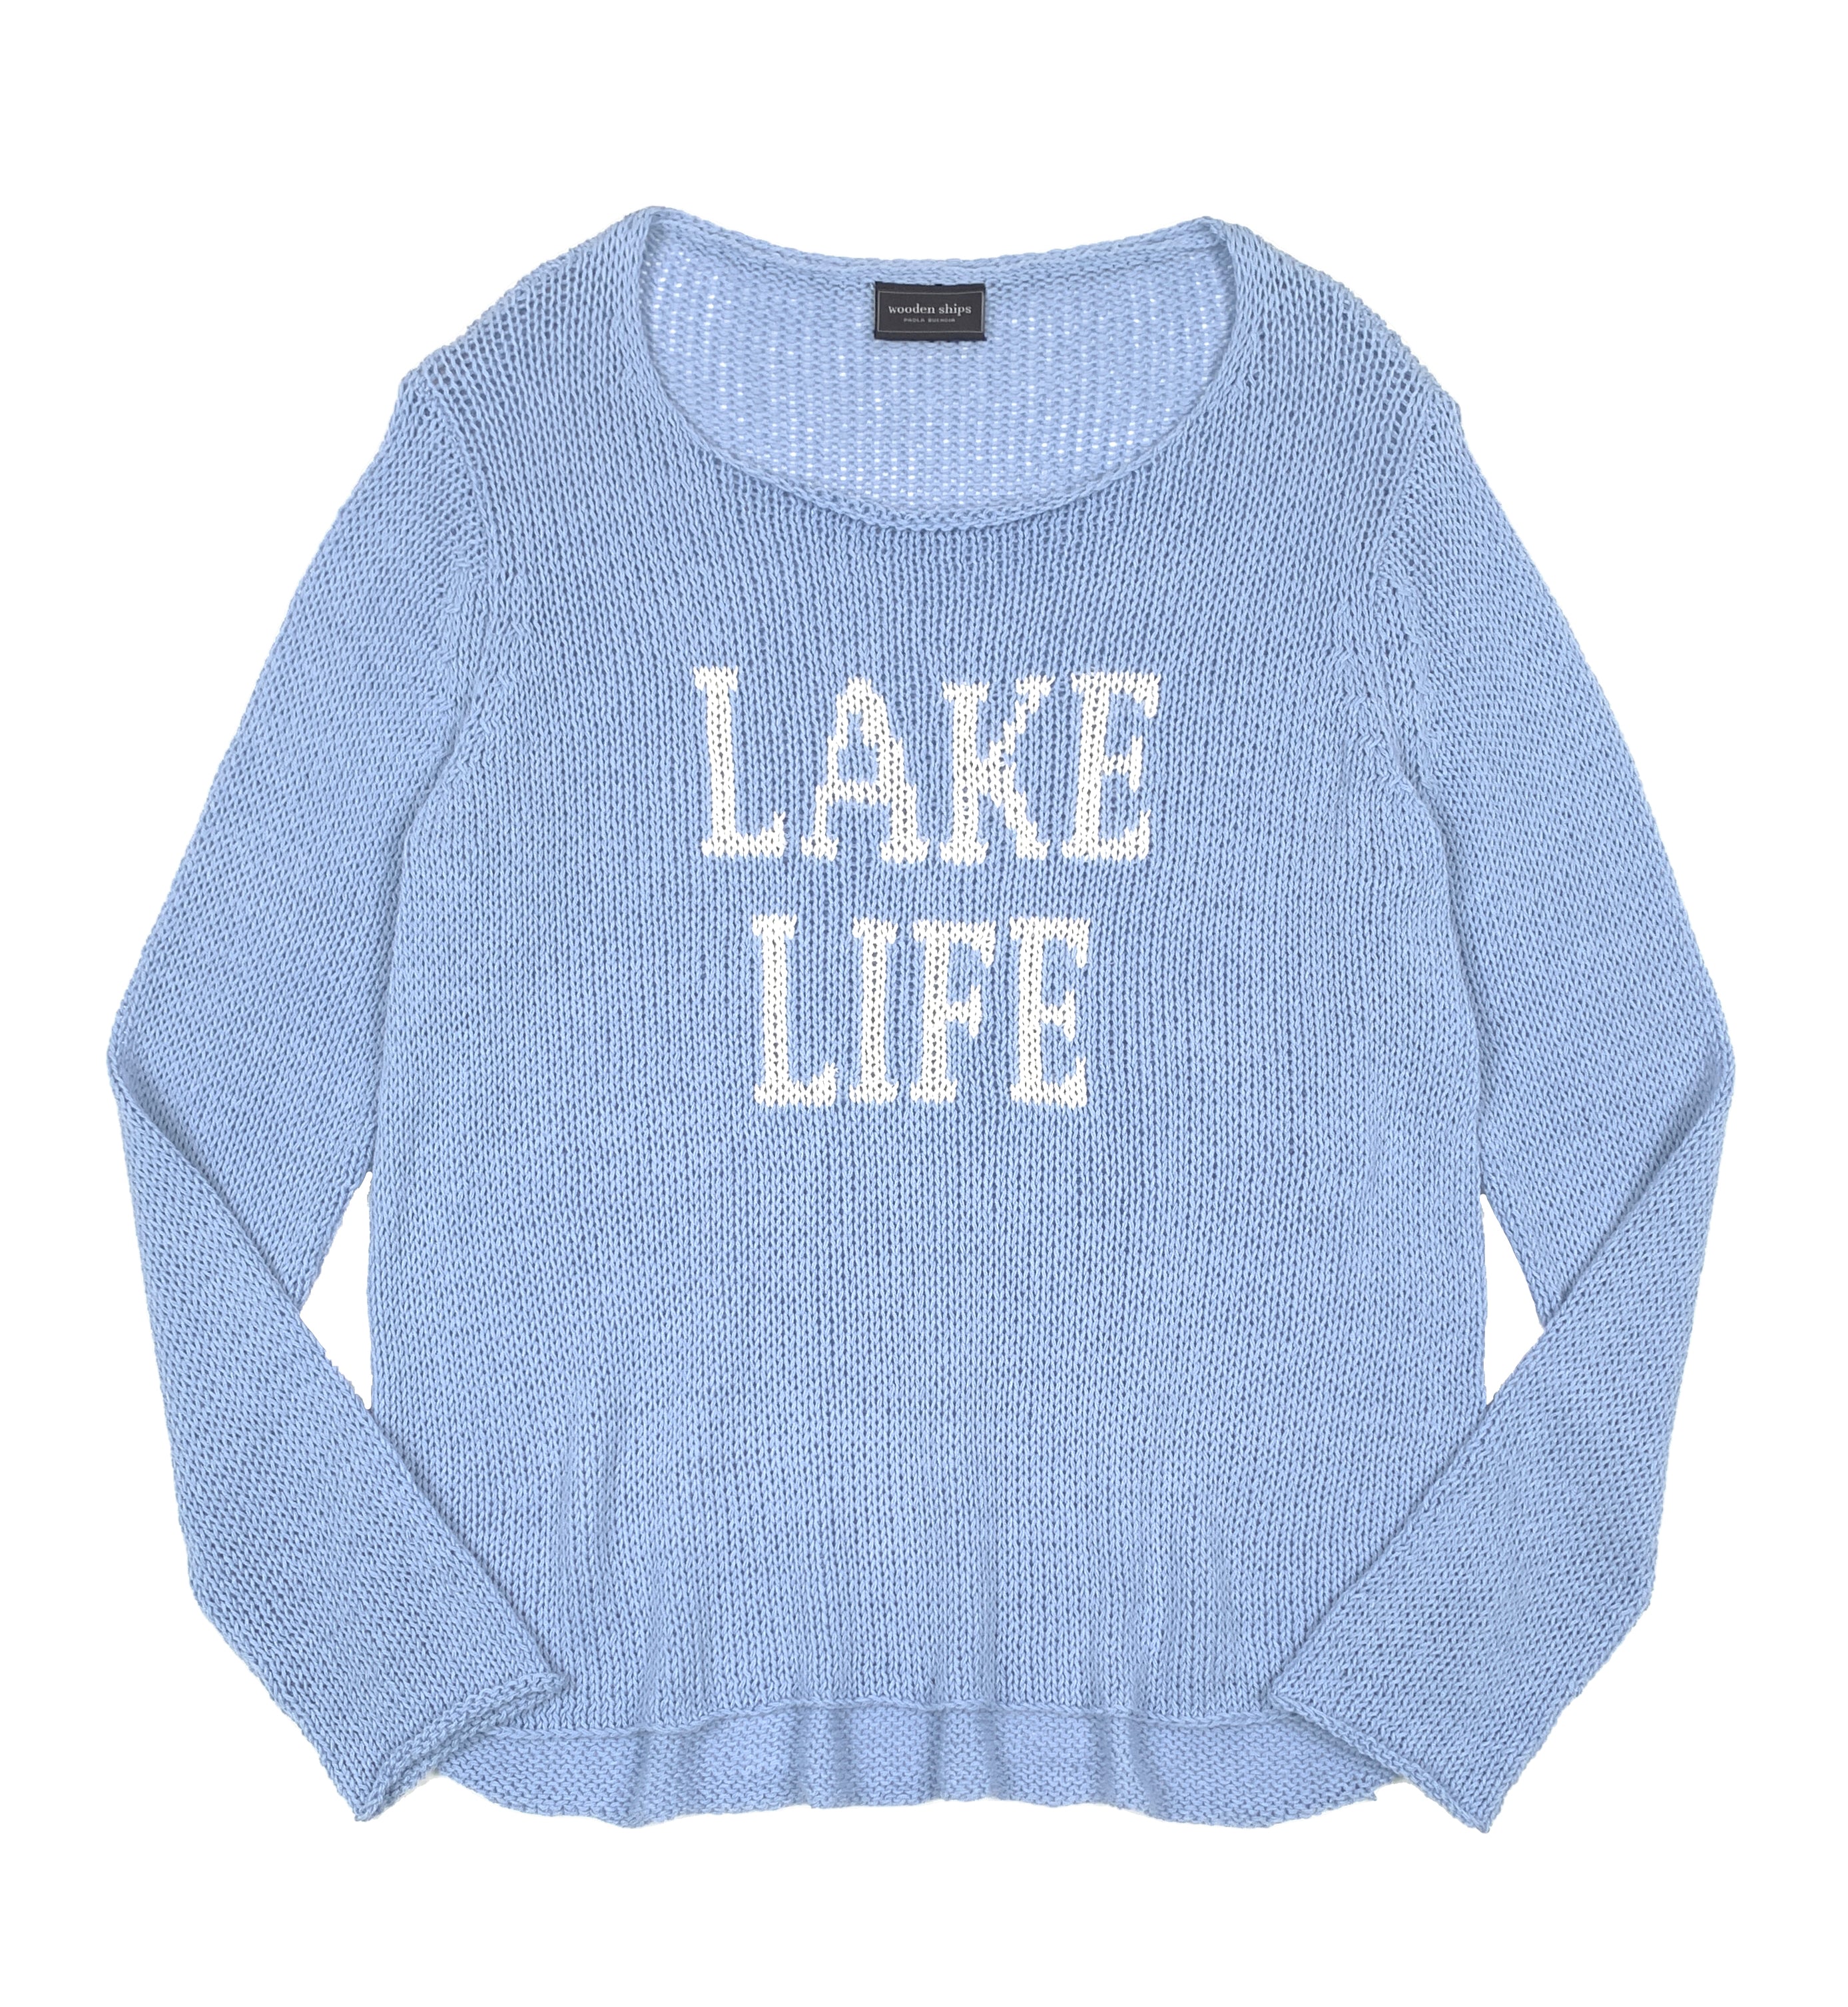 Lake Life Crew Cotton Sweater